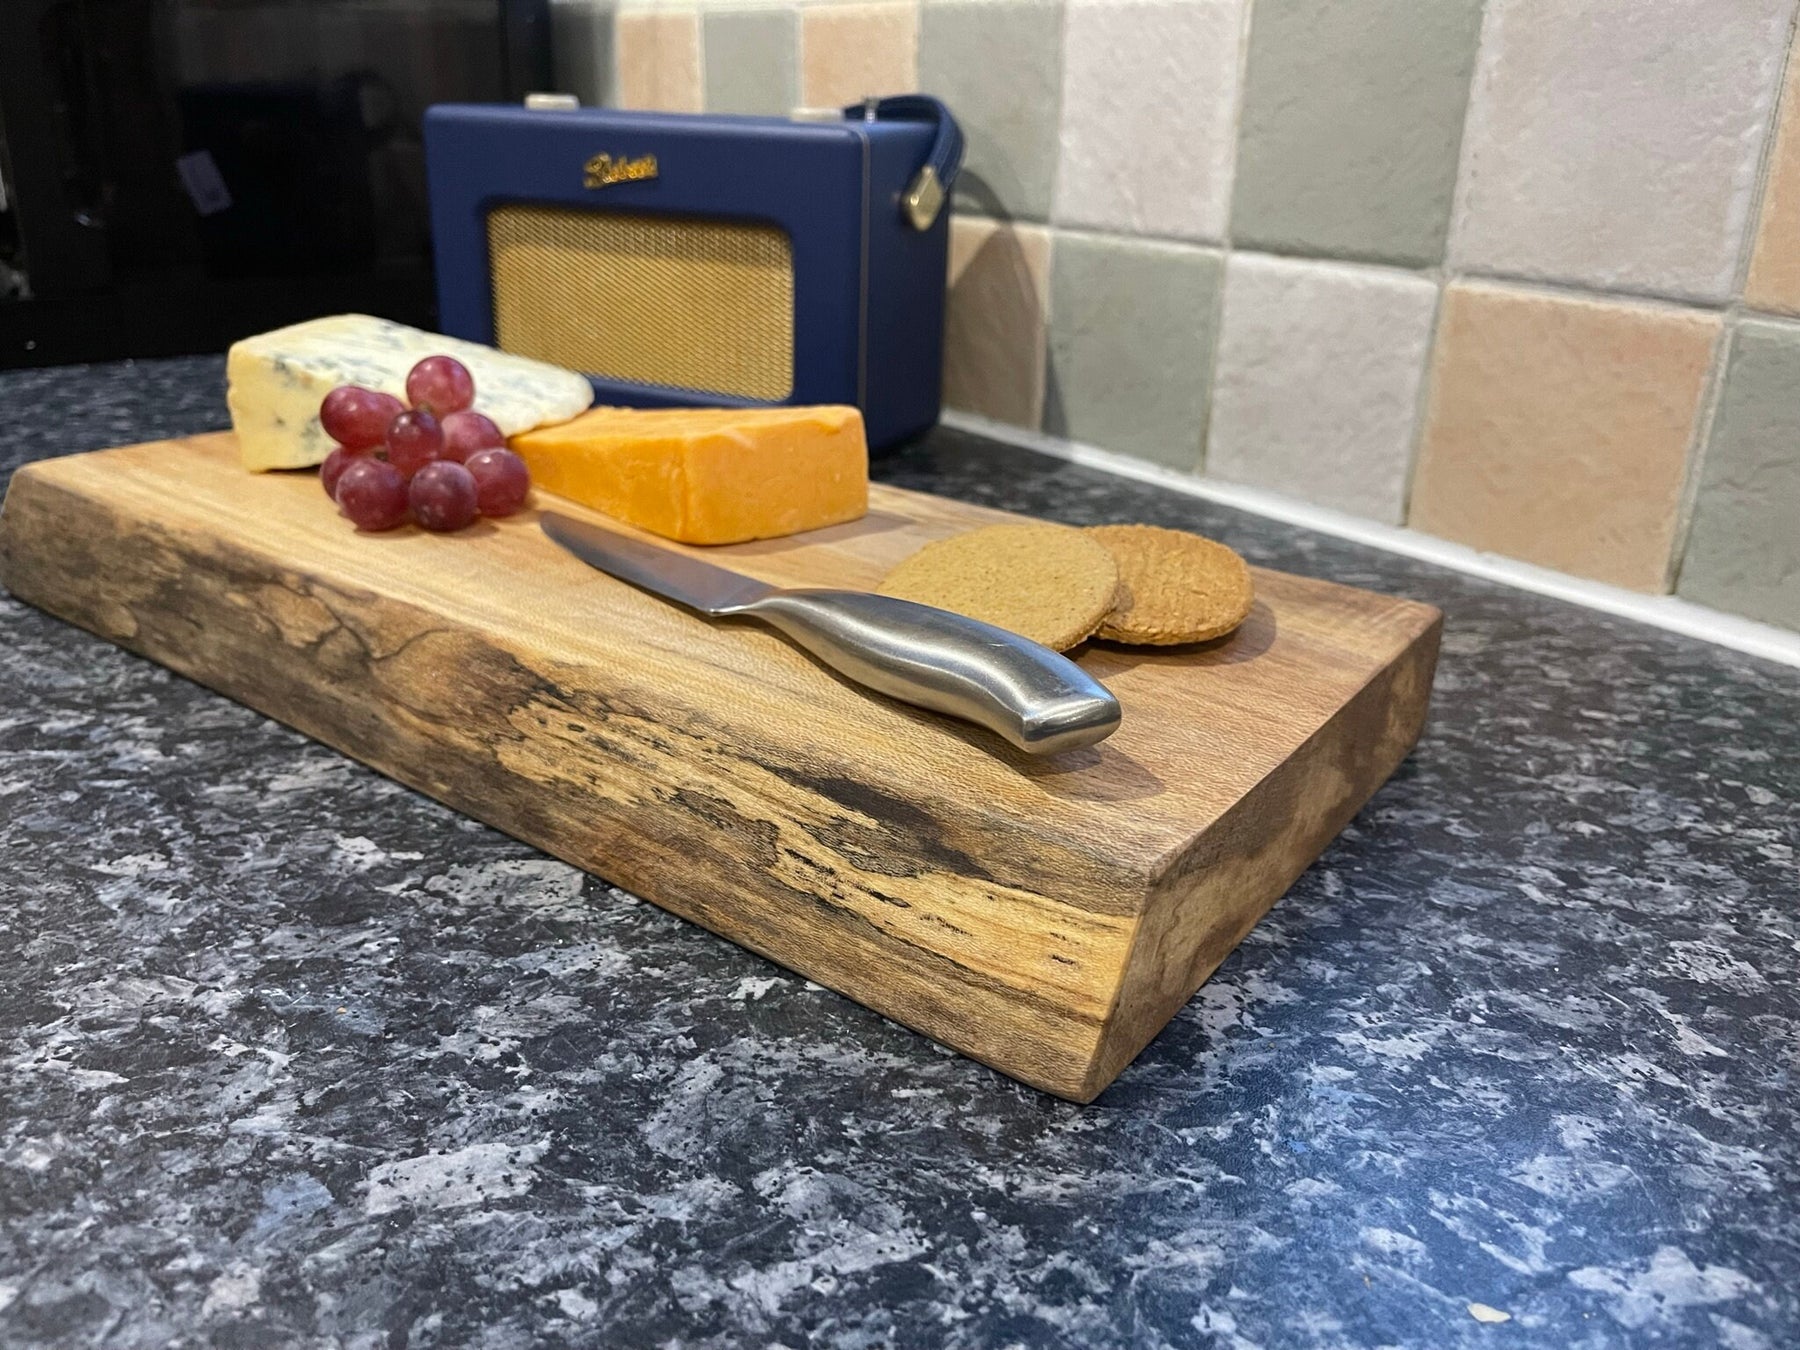 Large Hardwood Chopping Board - James Martin Market